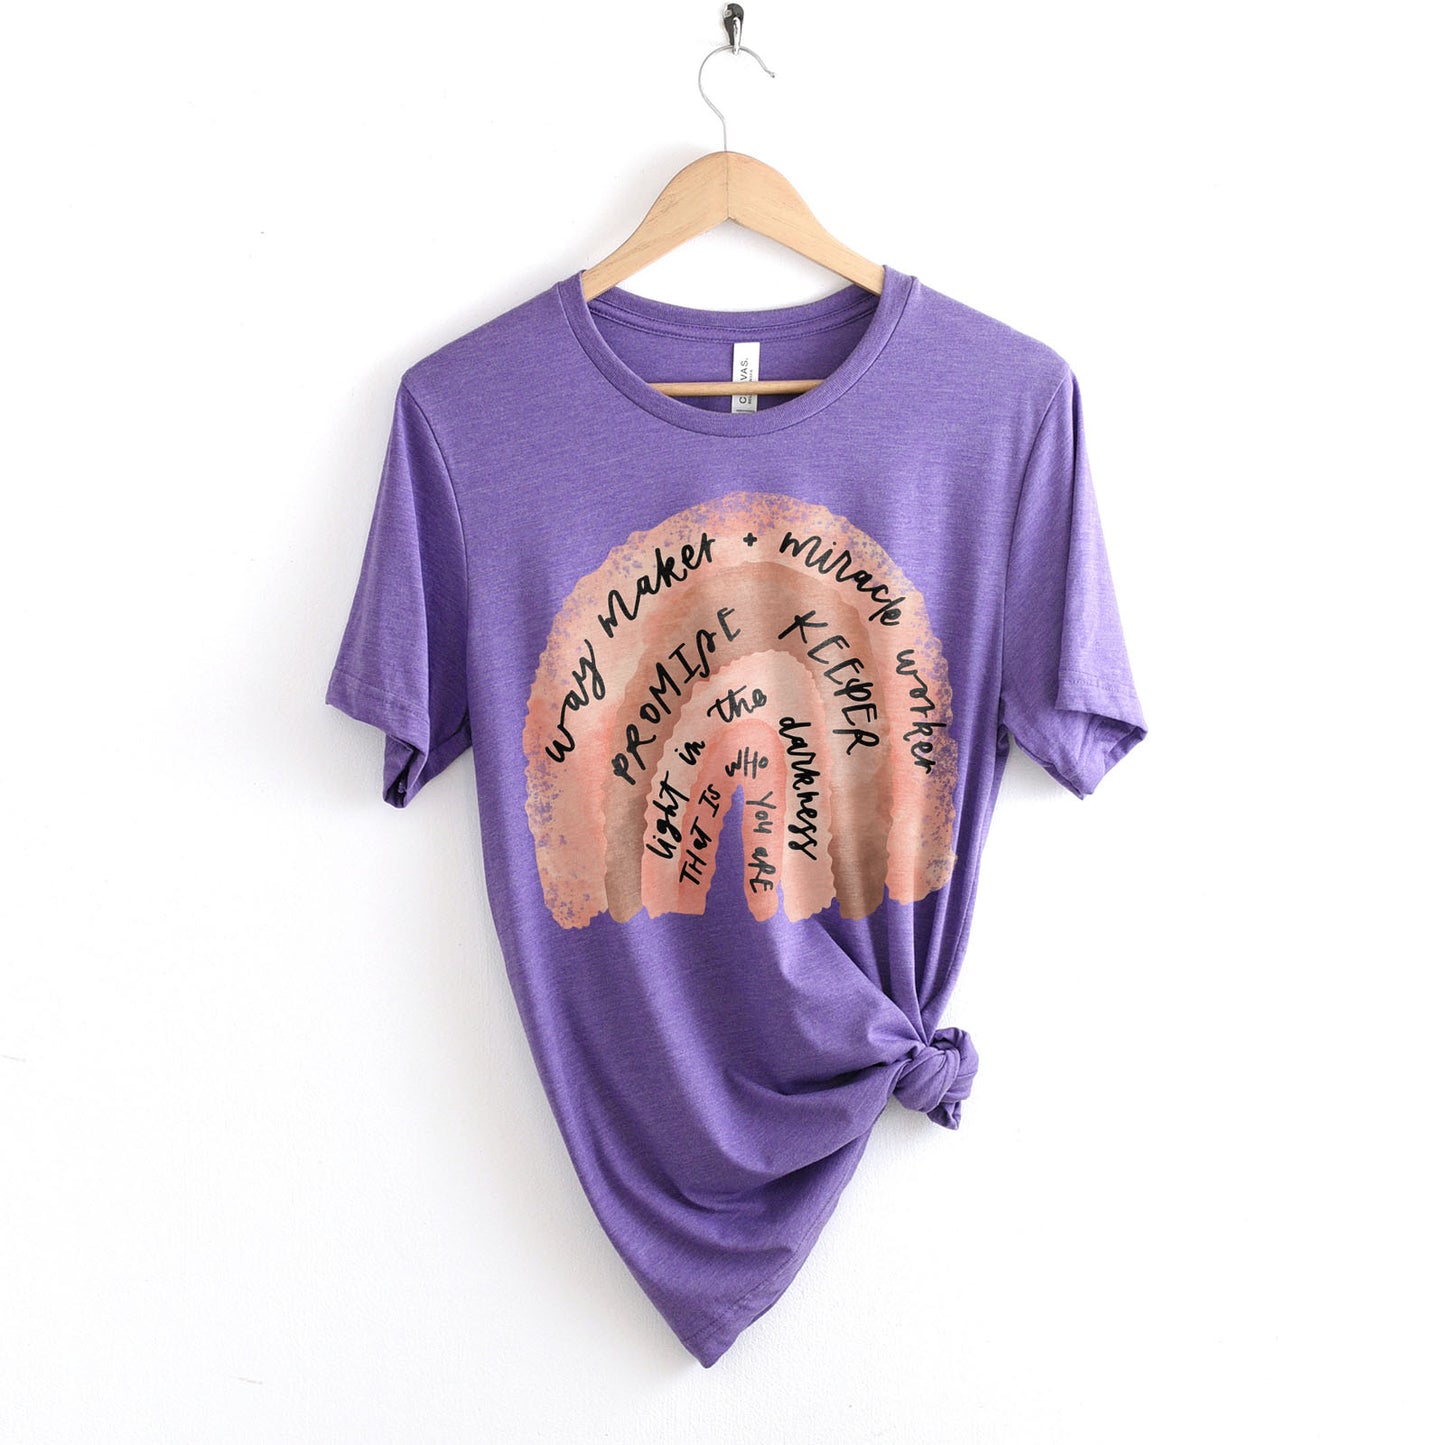 Way Maker Rainbow Tee Shirts For Women - Christian Shirts for Women - Religious Tee Shirts